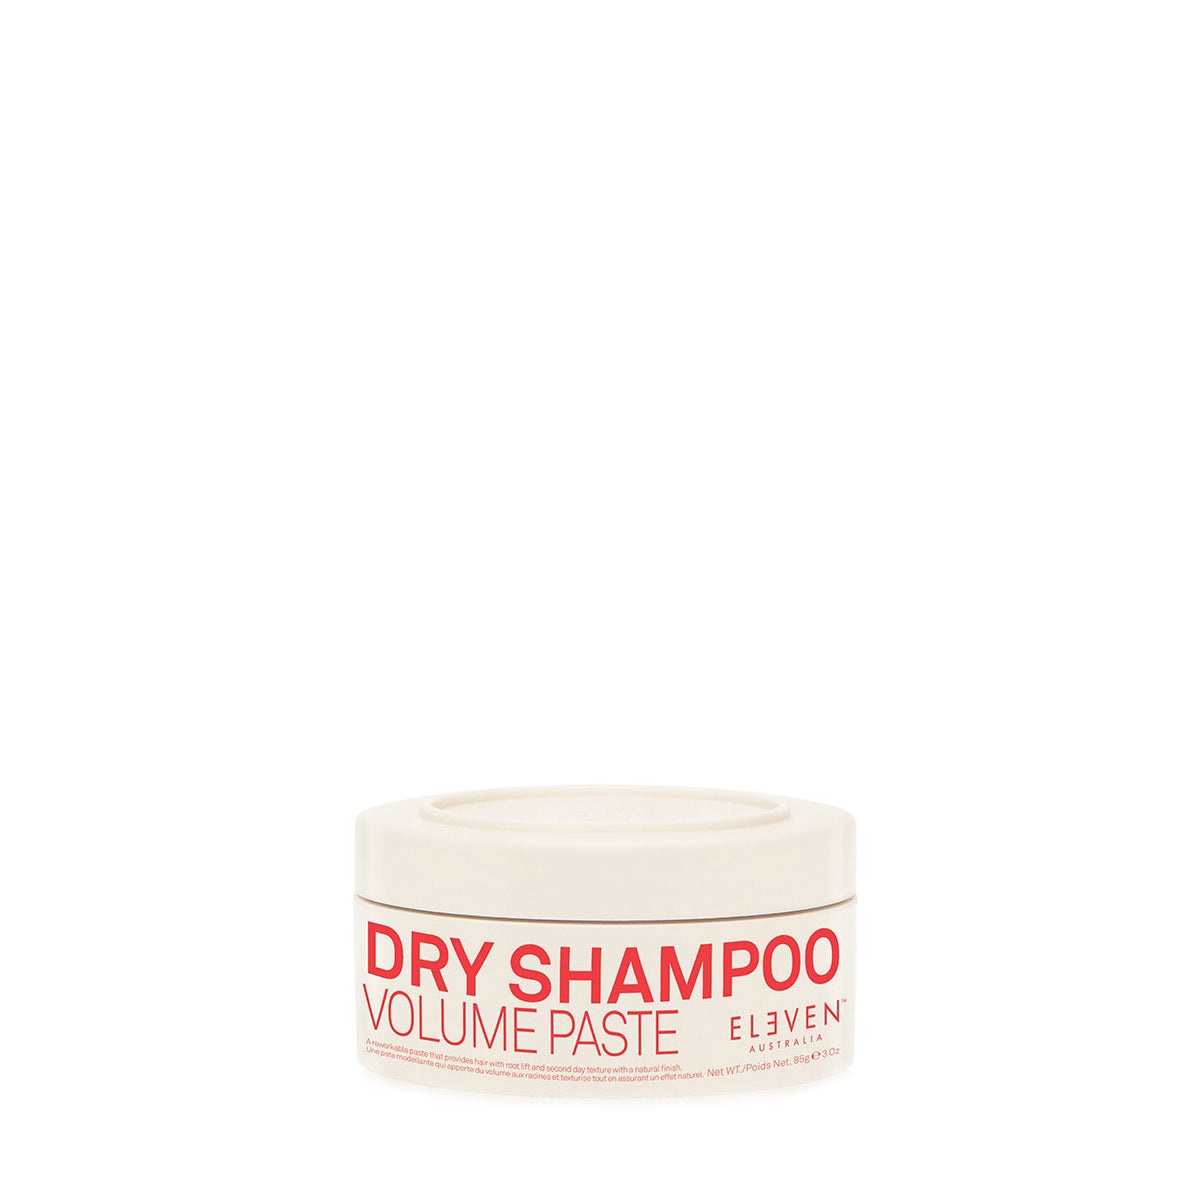 Eleven dry shampoo volume paste